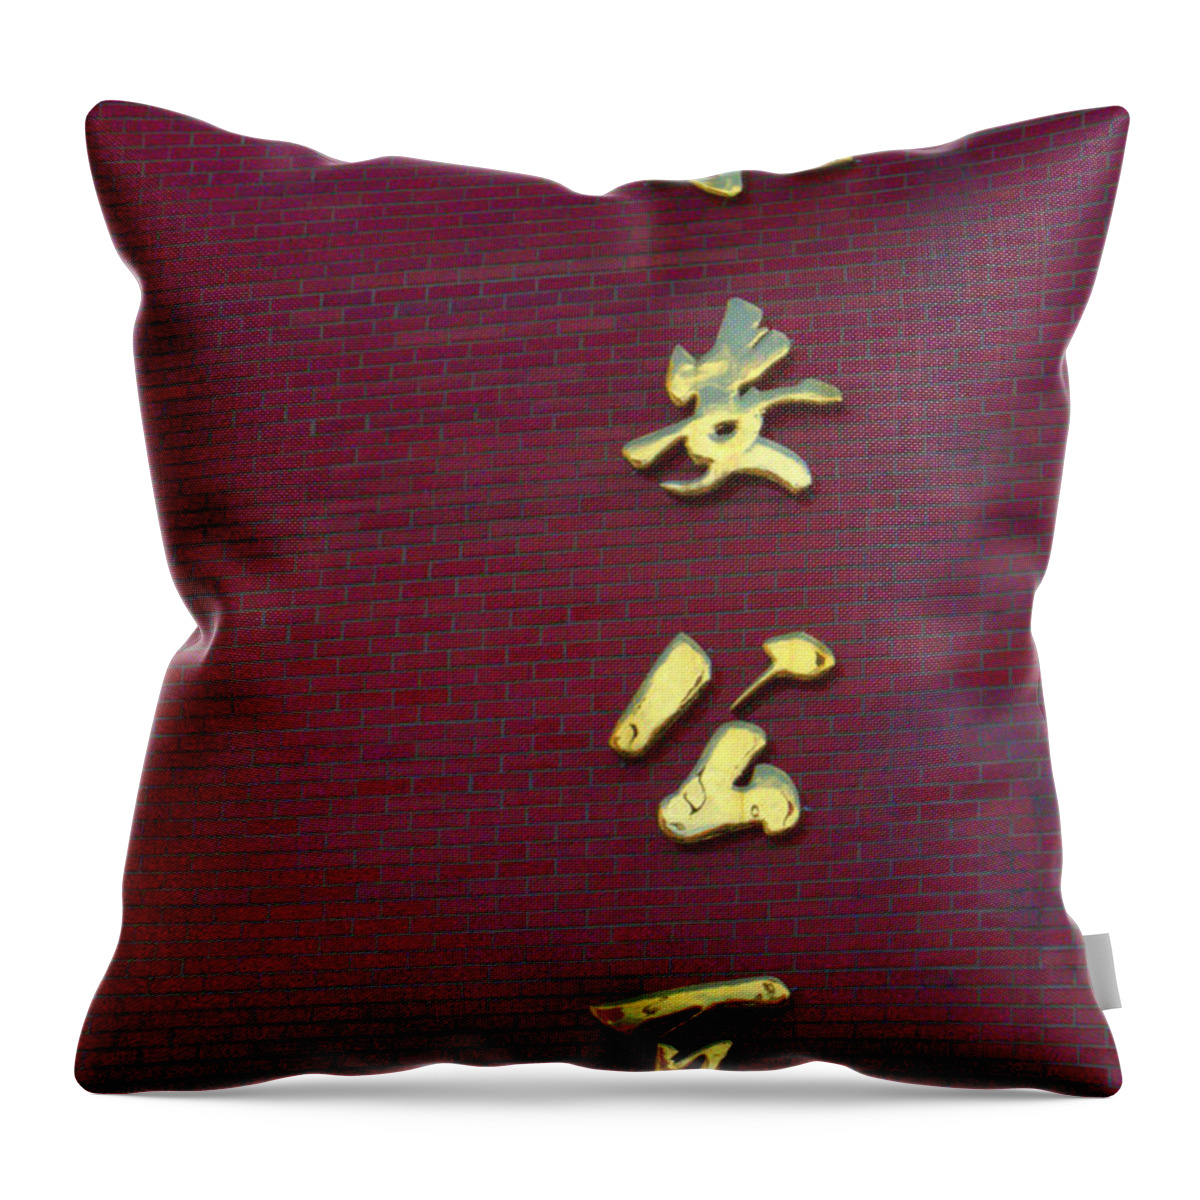 Chinese Throw Pillow featuring the photograph Zhongwen by Deborah Crew-Johnson